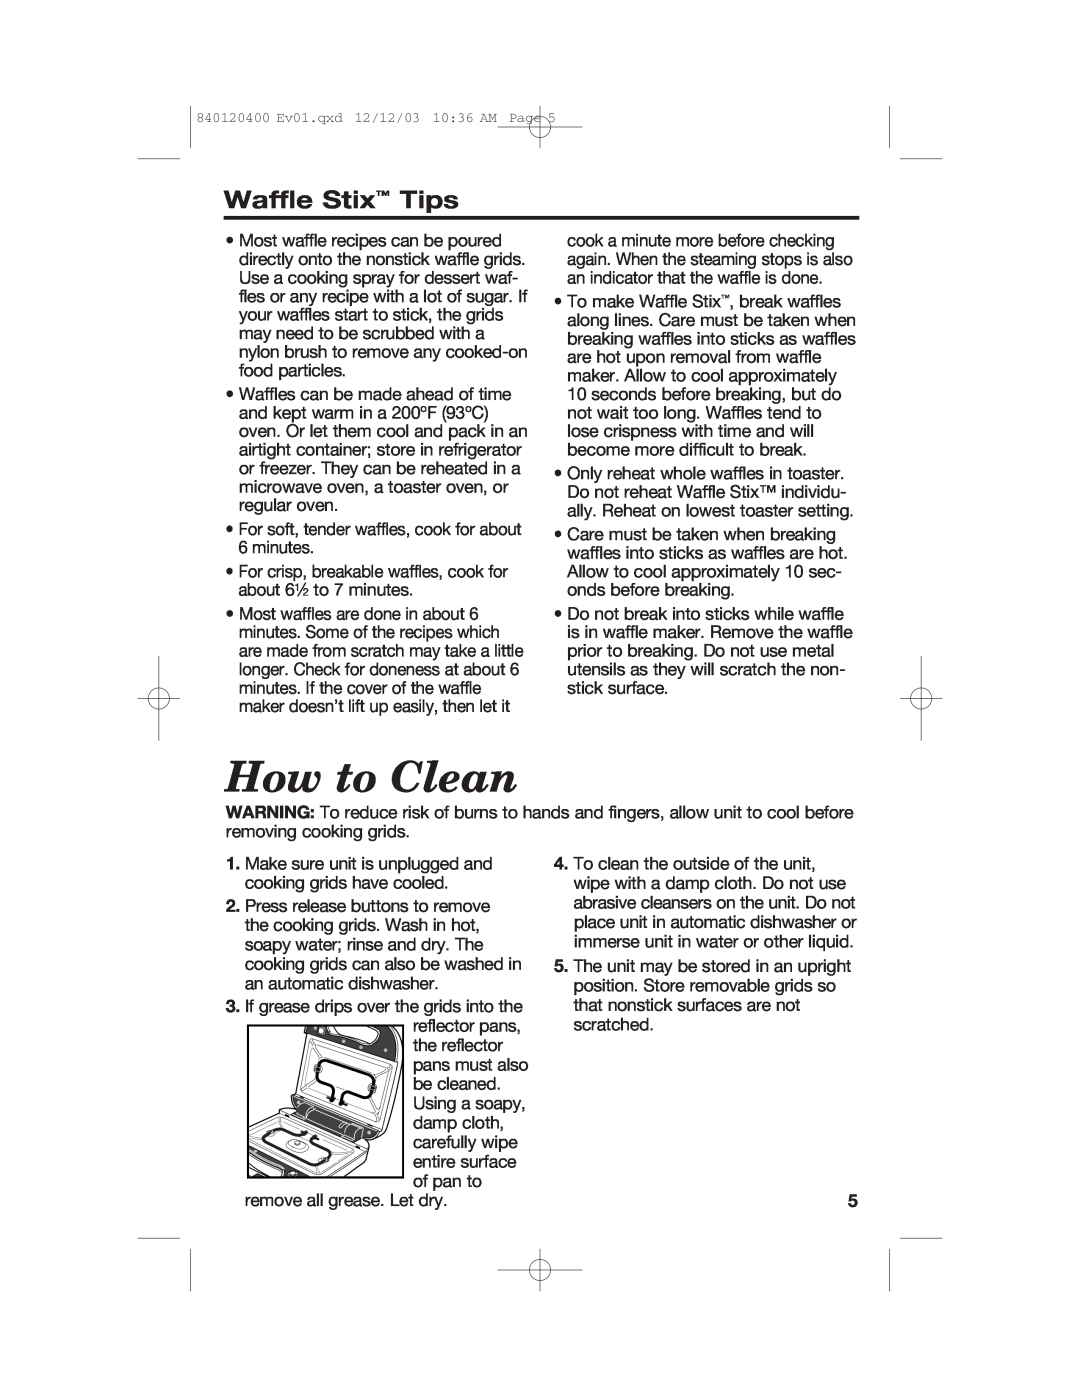 Hamilton Beach 26291 manual How to Clean, Waffle Stix Tips 